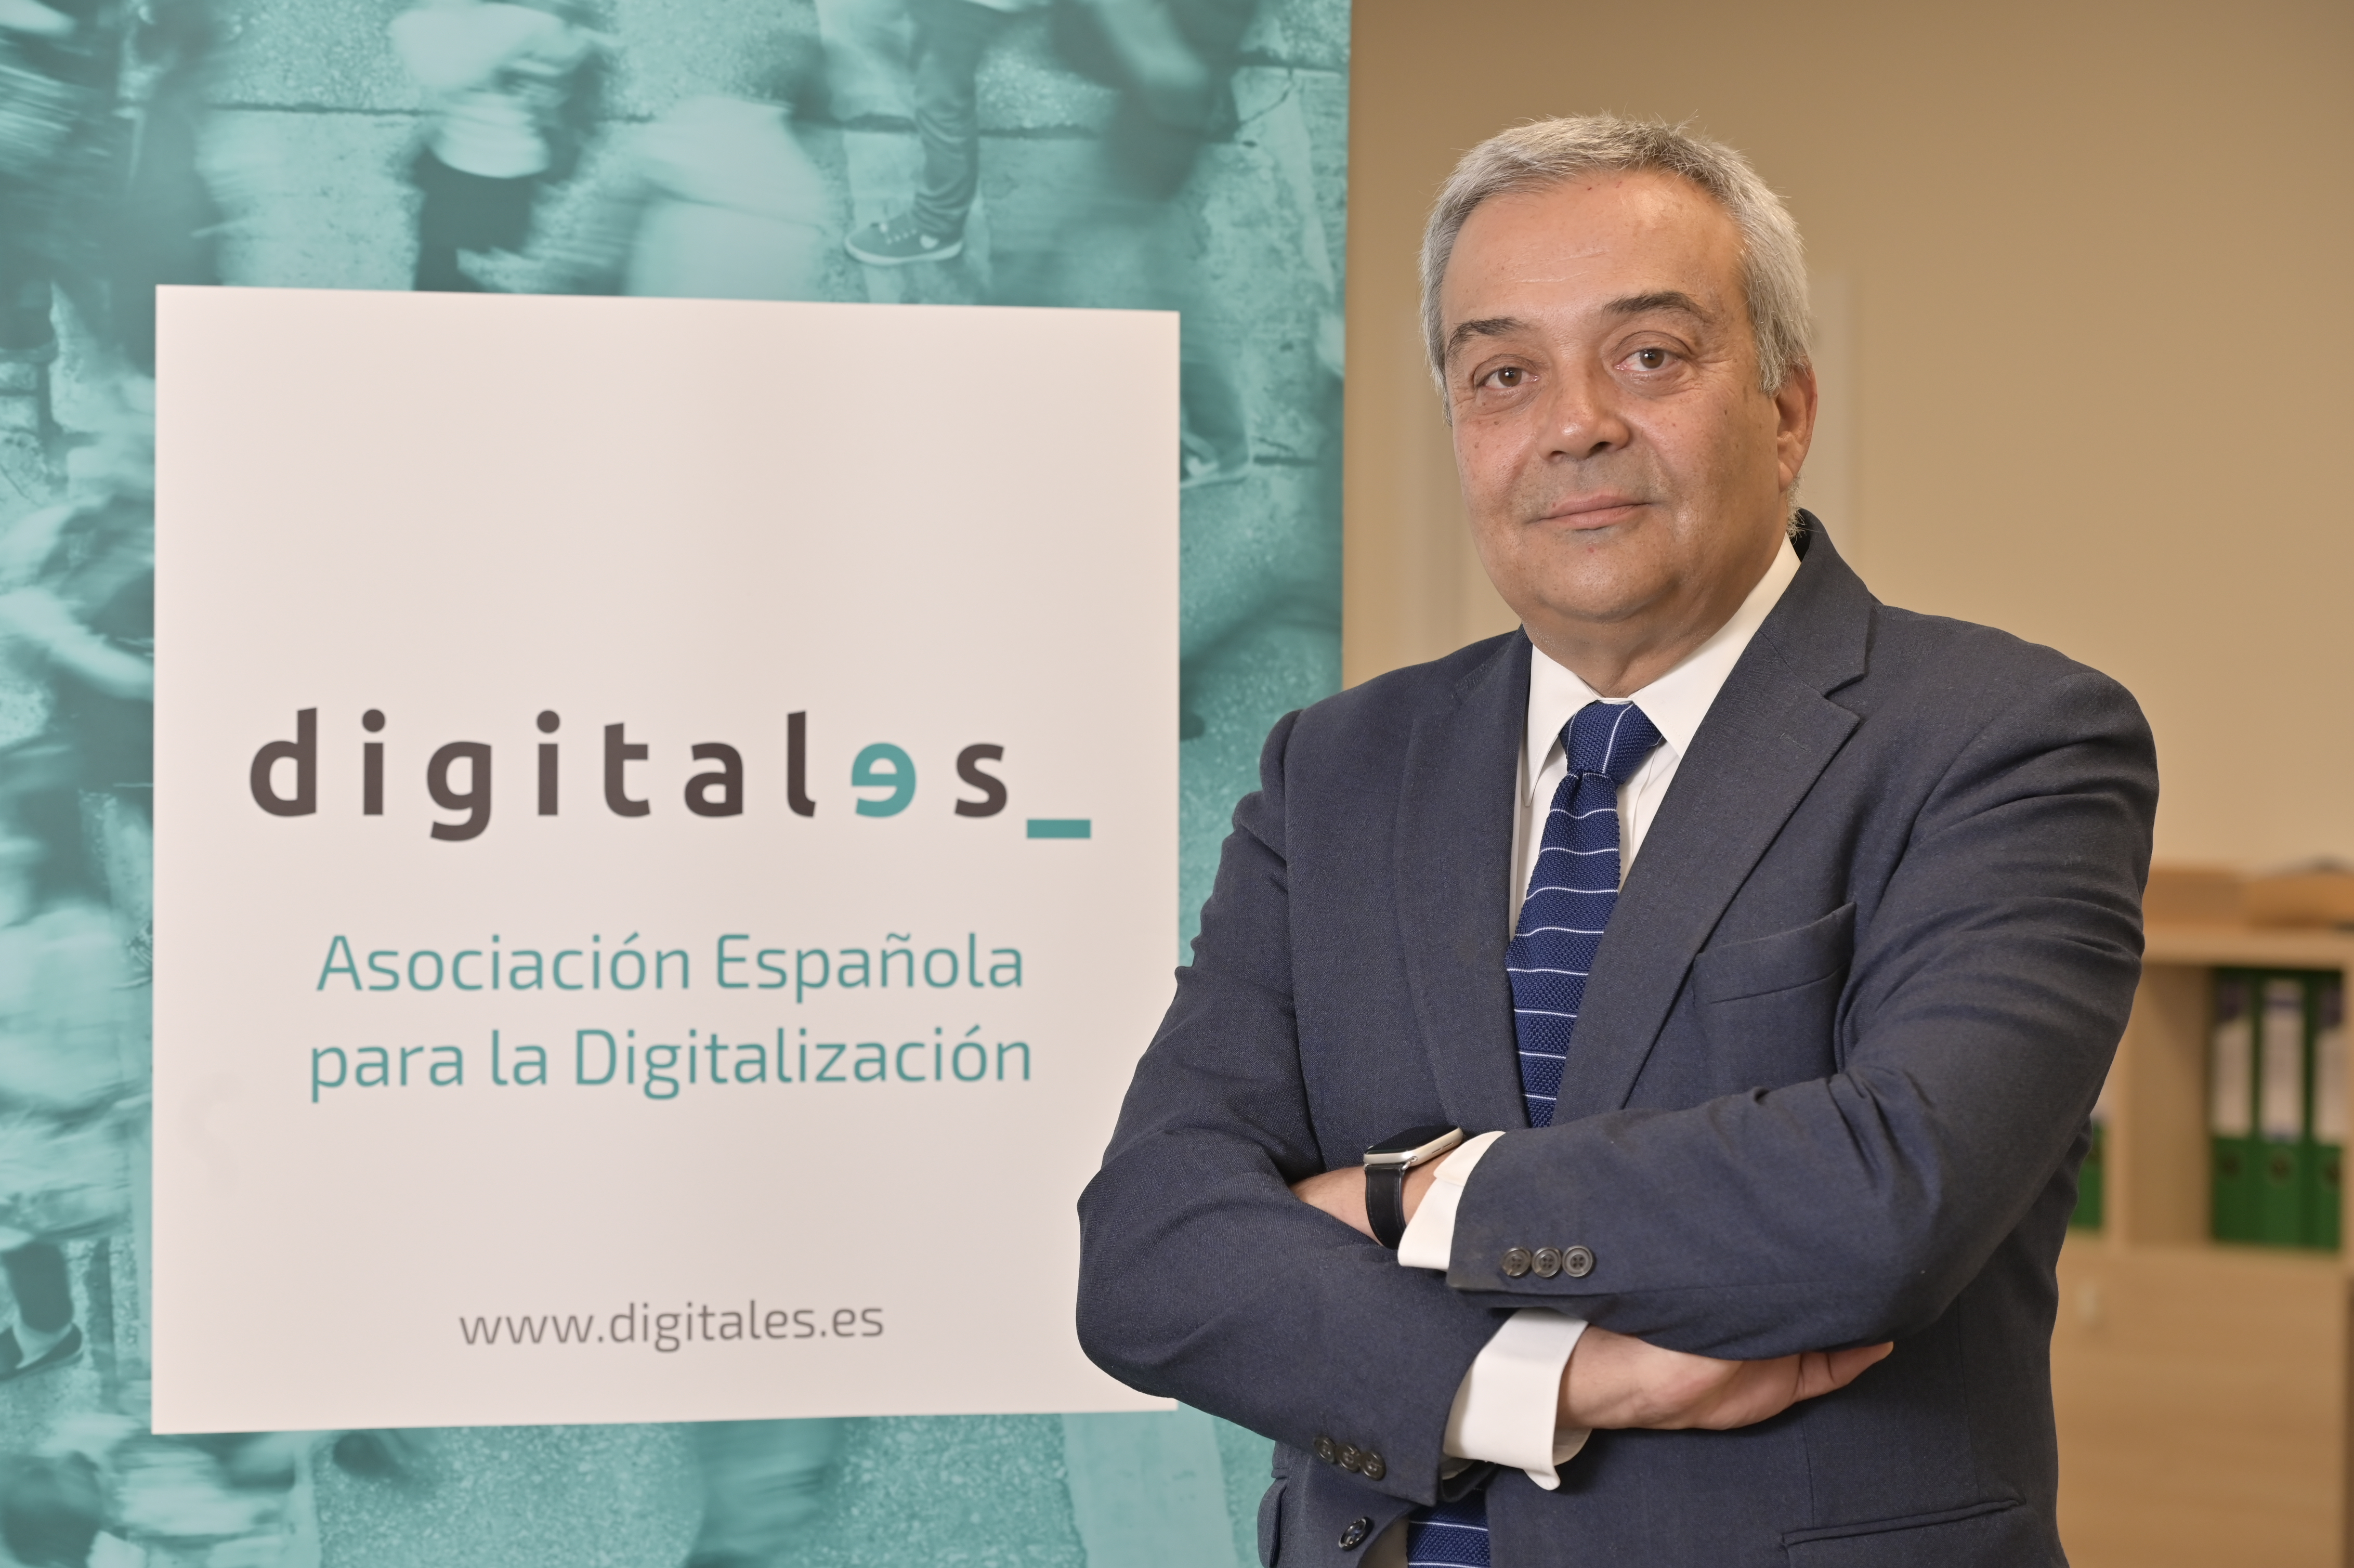 Víctor Calvo-Sotelo director general Digitales